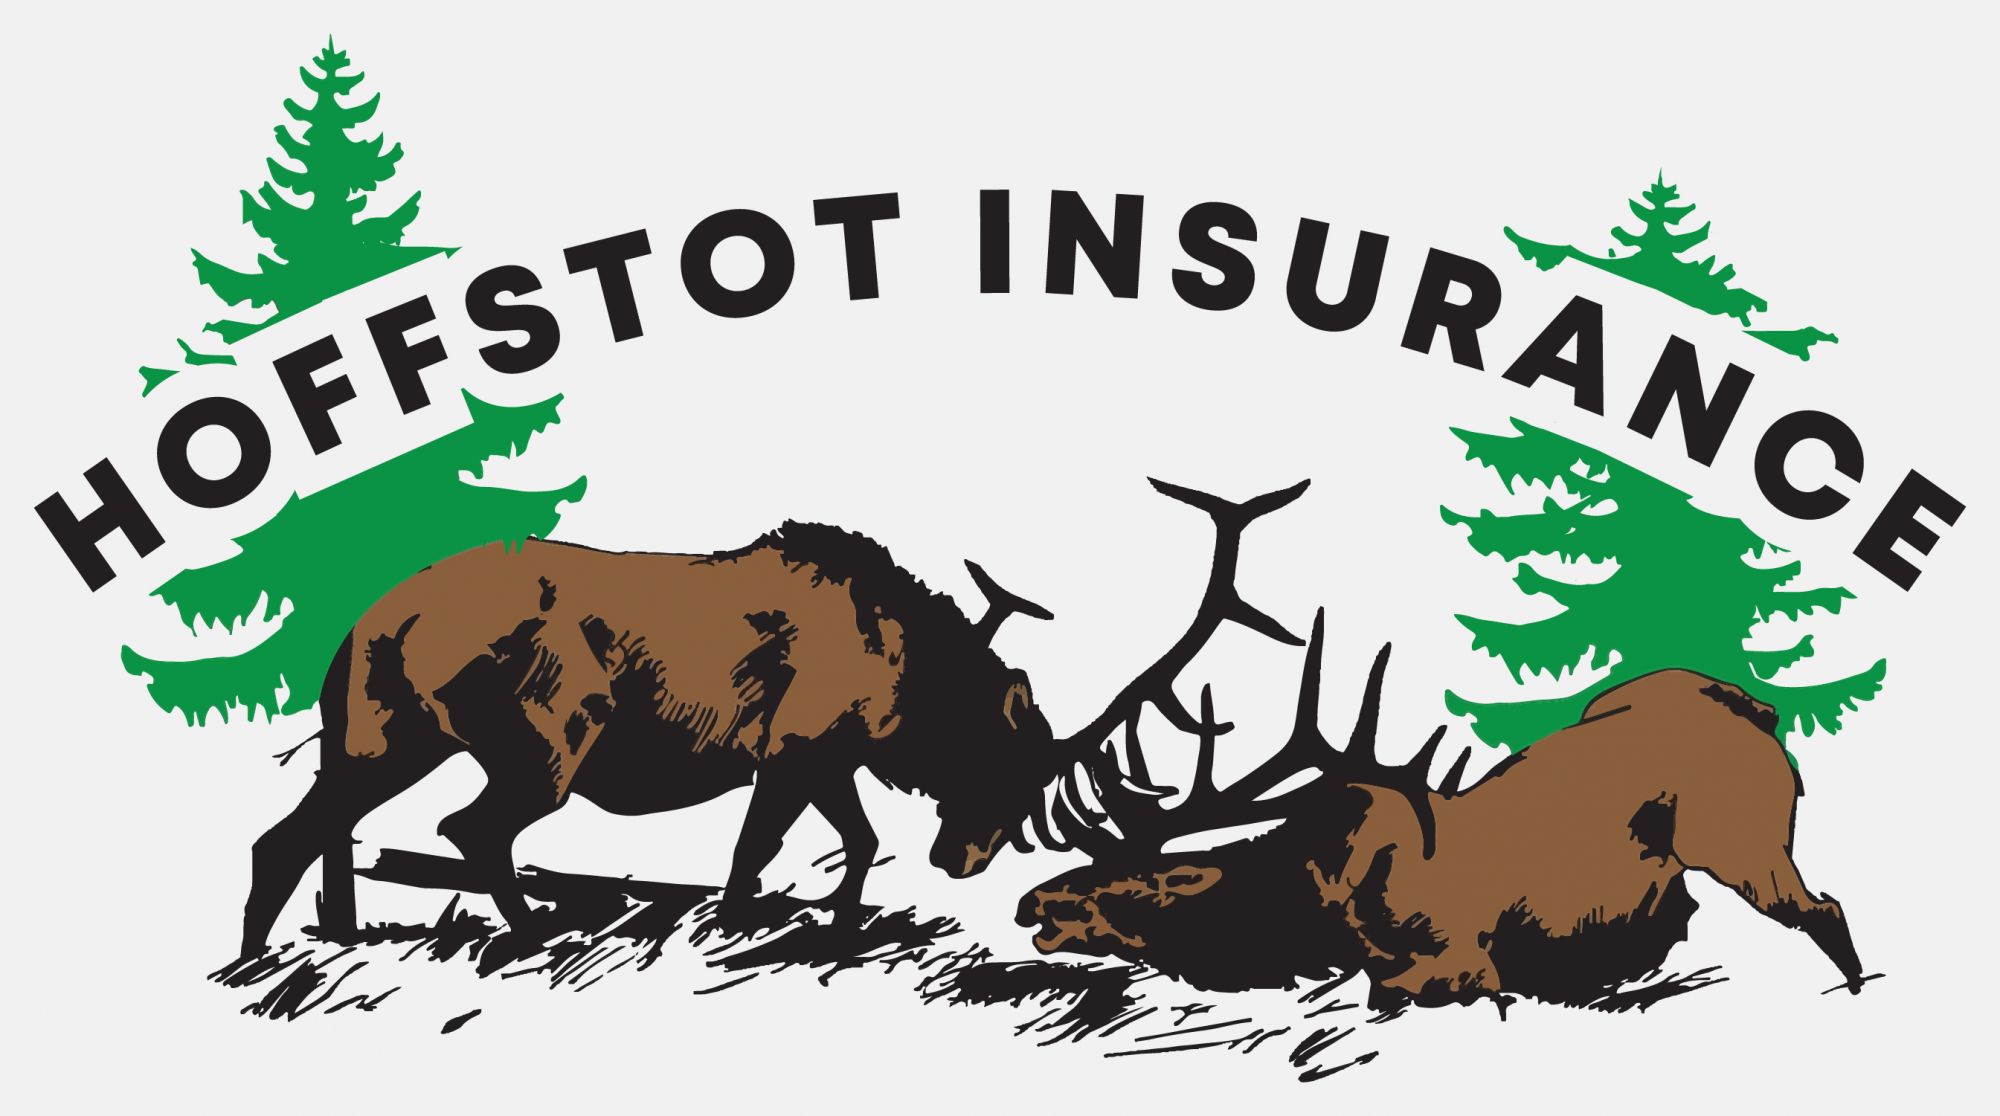 About Us - Ryan Hoffstot Insurance Agency Inc.